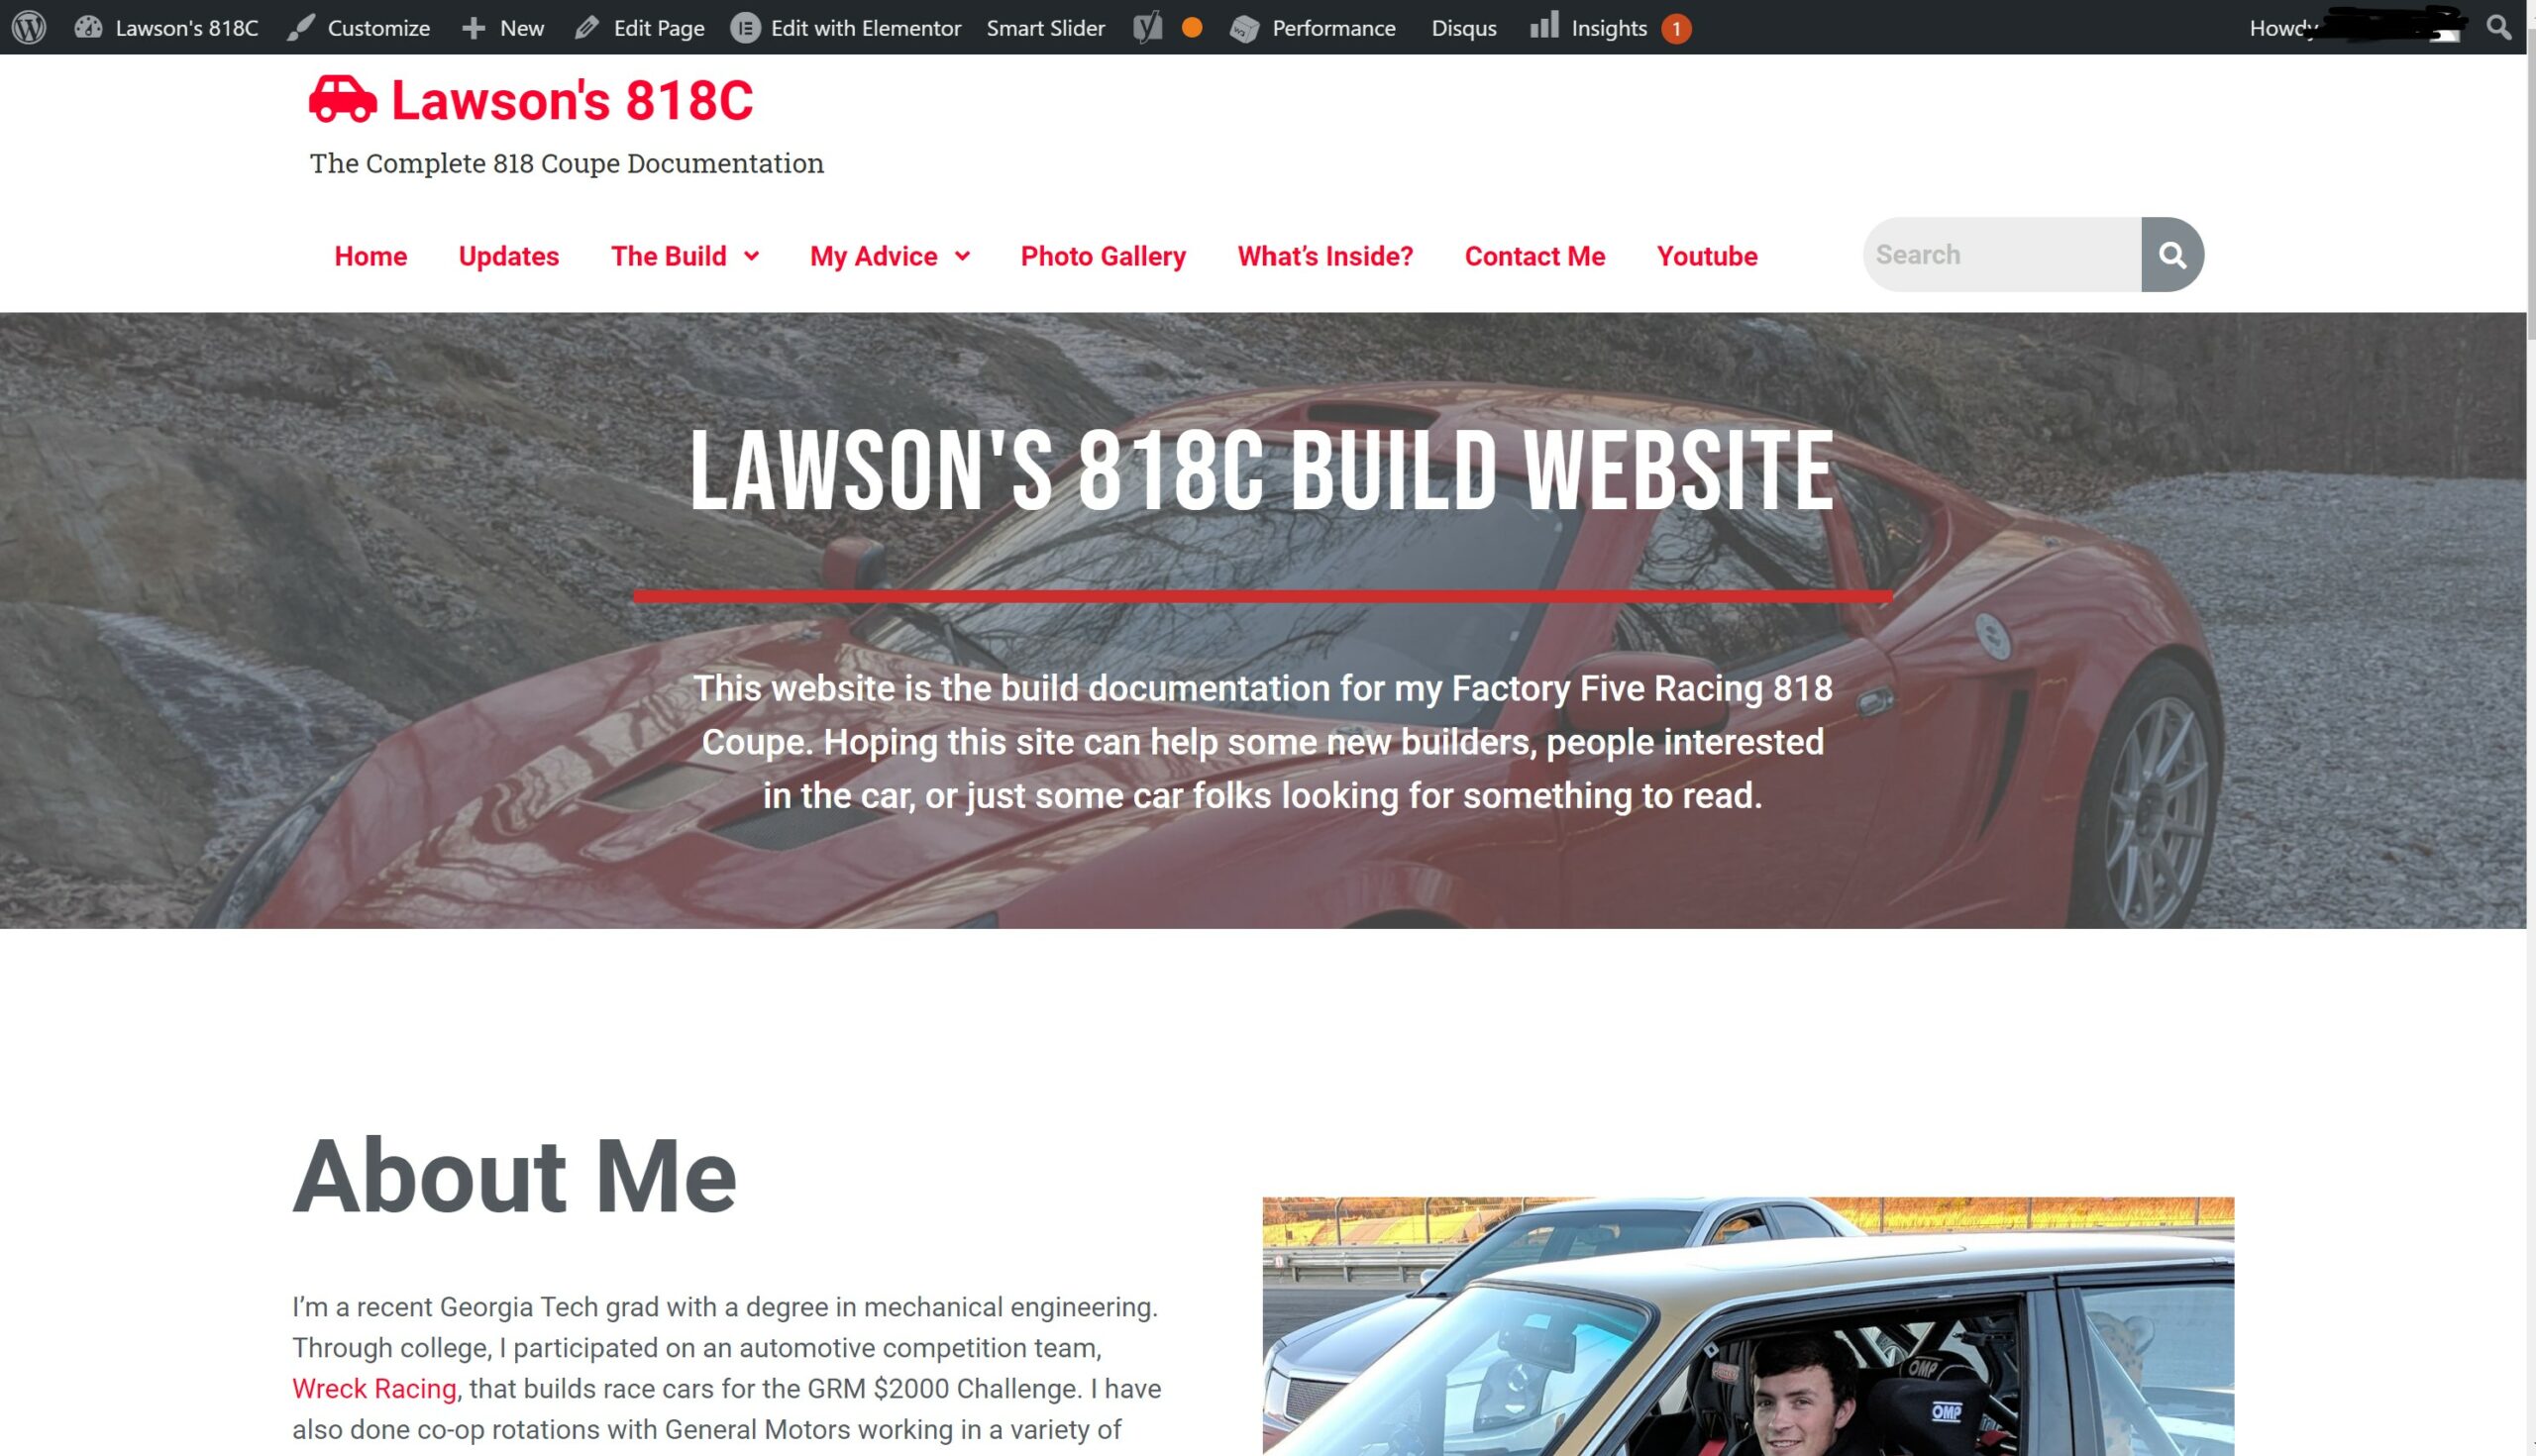 Version 2 of Lawson's 818C Website